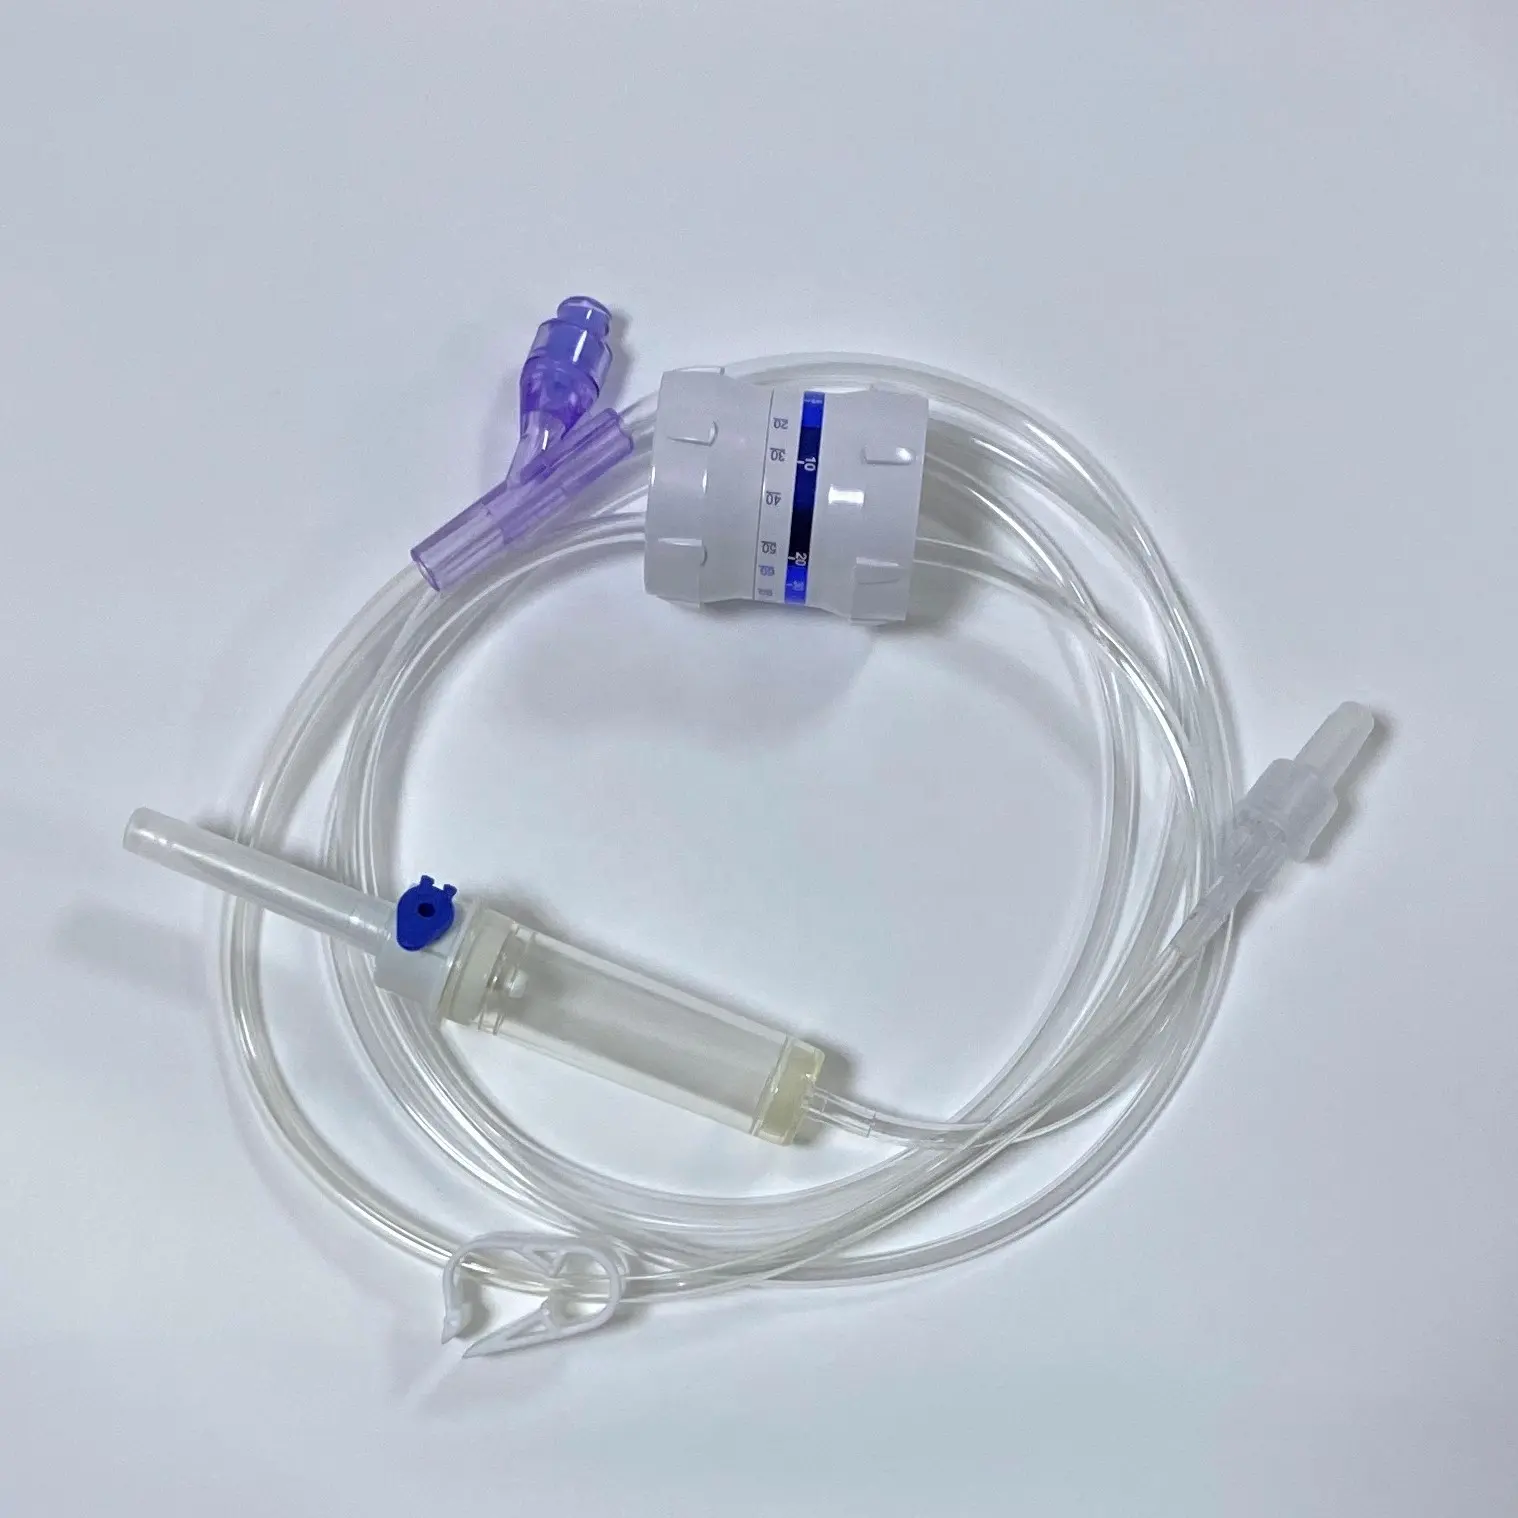 Disposable medical Y port IV infusion set with flow regulator